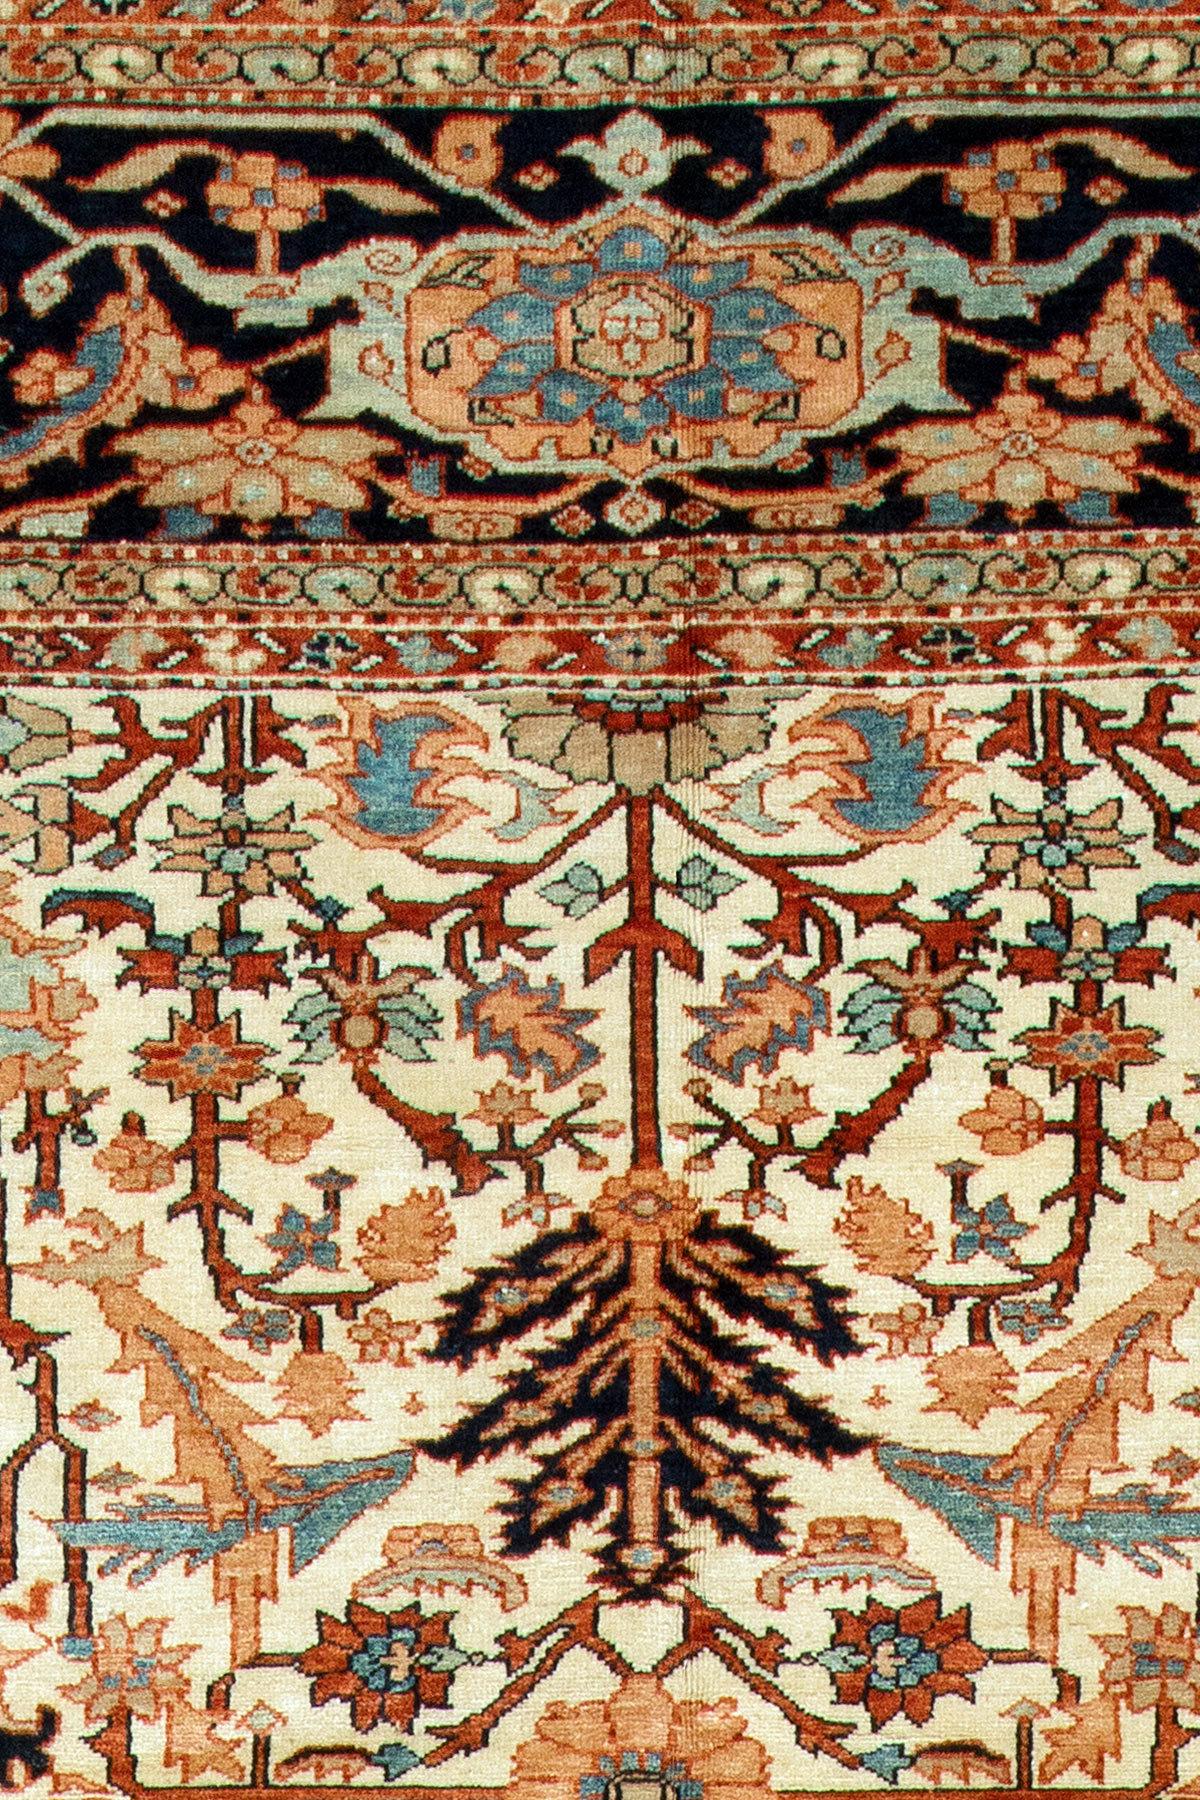 Hand-Woven Vintage Inspired Oversize Persian Heriz Carpet